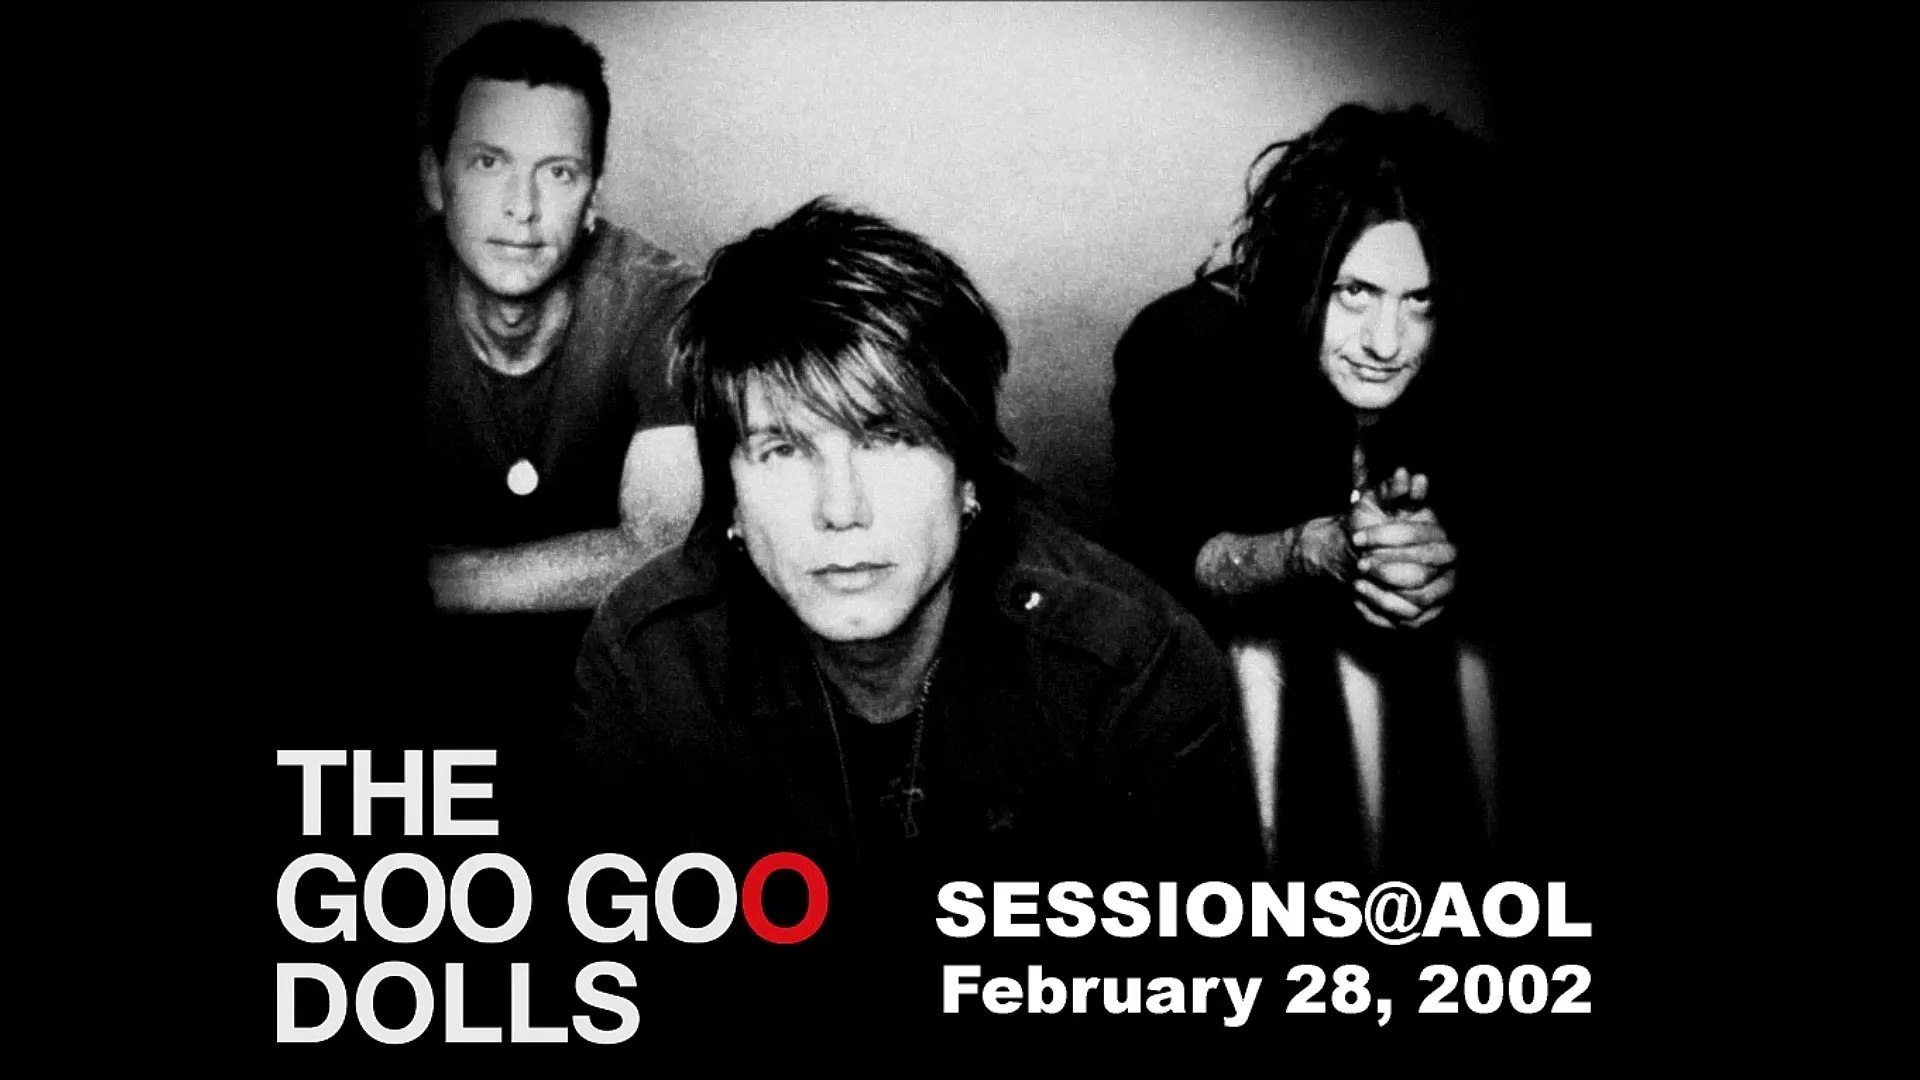 Goo Goo Dolls - Session@AOL 02-28-2002 (Audio) - video dailymotion.